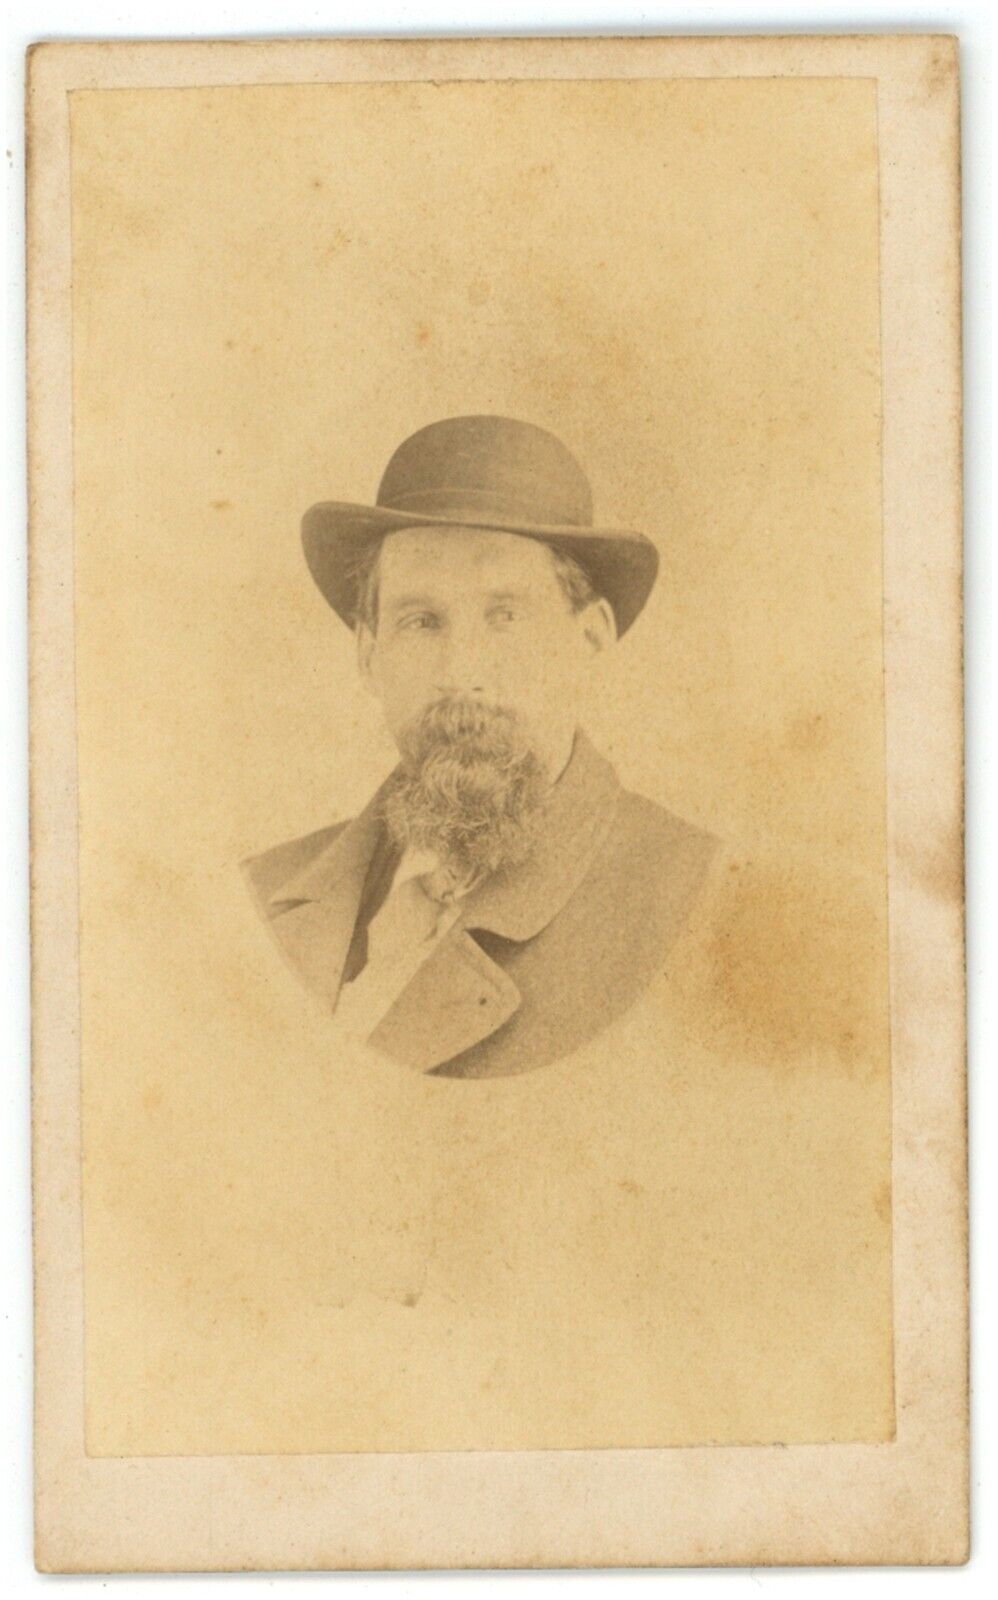 CIRCA 1871 CDV Featuring Handsome Dashing Man With Goatee Beard Wearing Hat